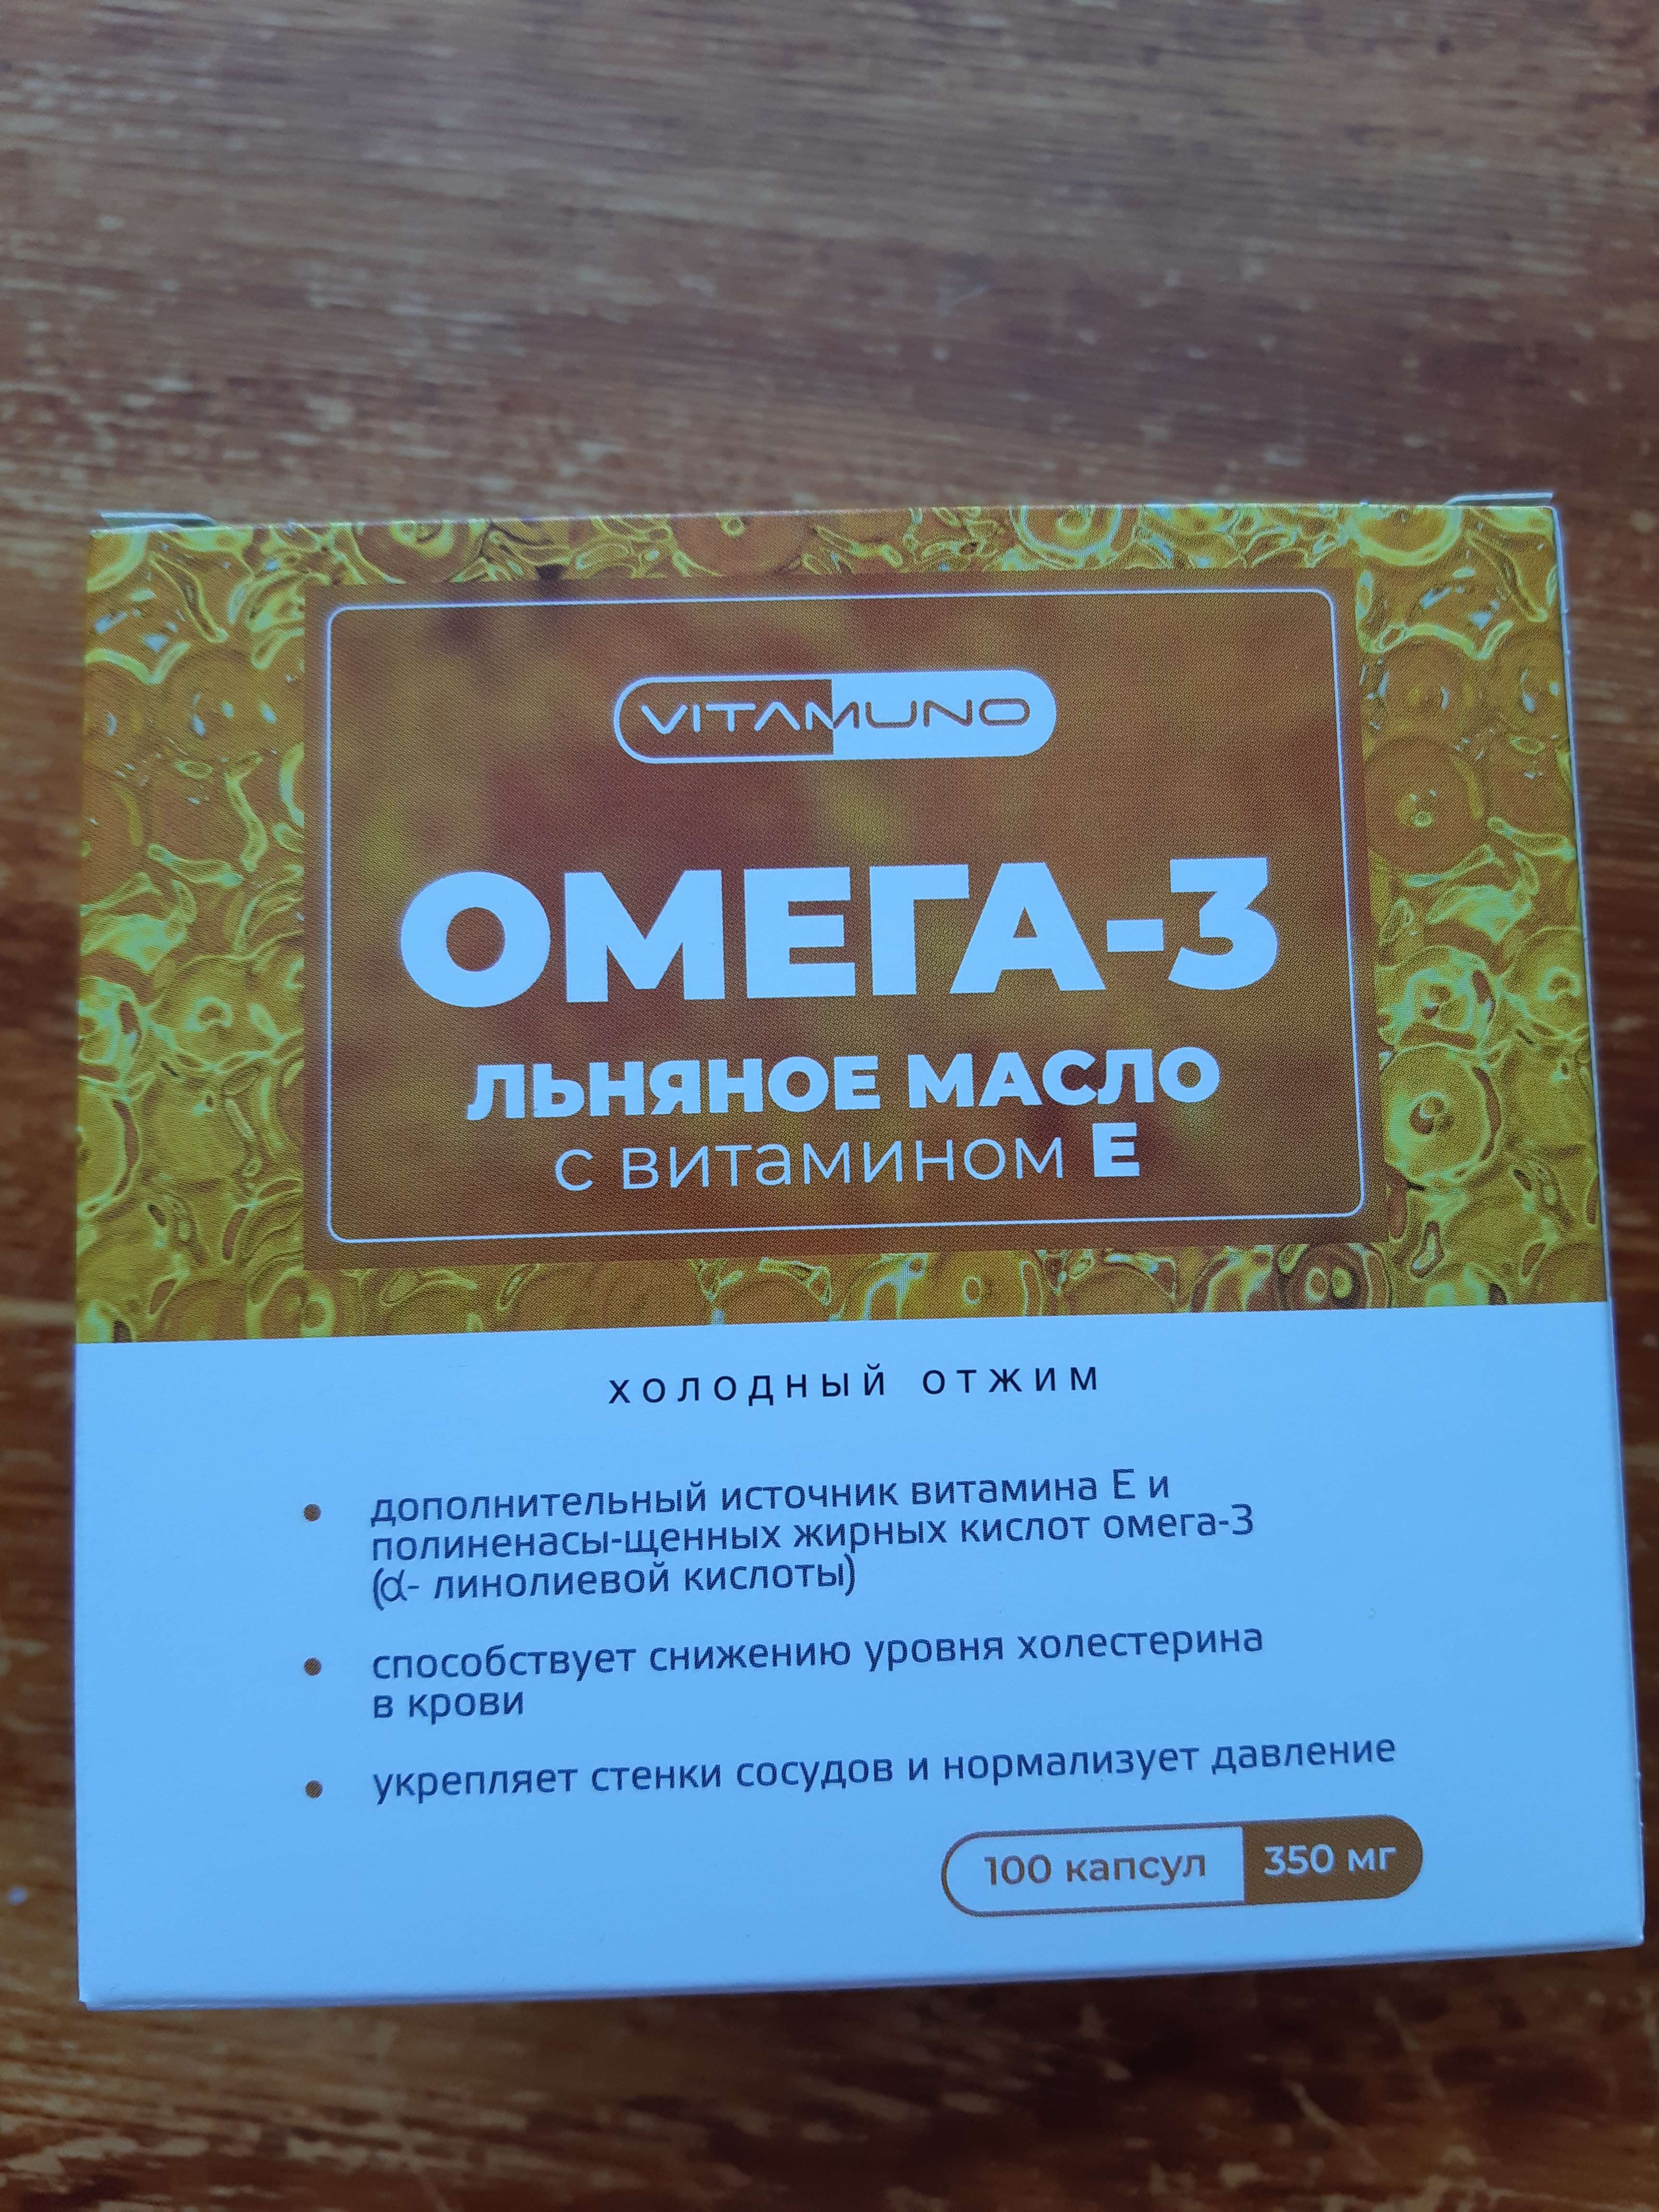 Фотография покупателя товара Льняное масло Омега-3 с витамином Е, 100 капсул по 350 мг - Фото 3